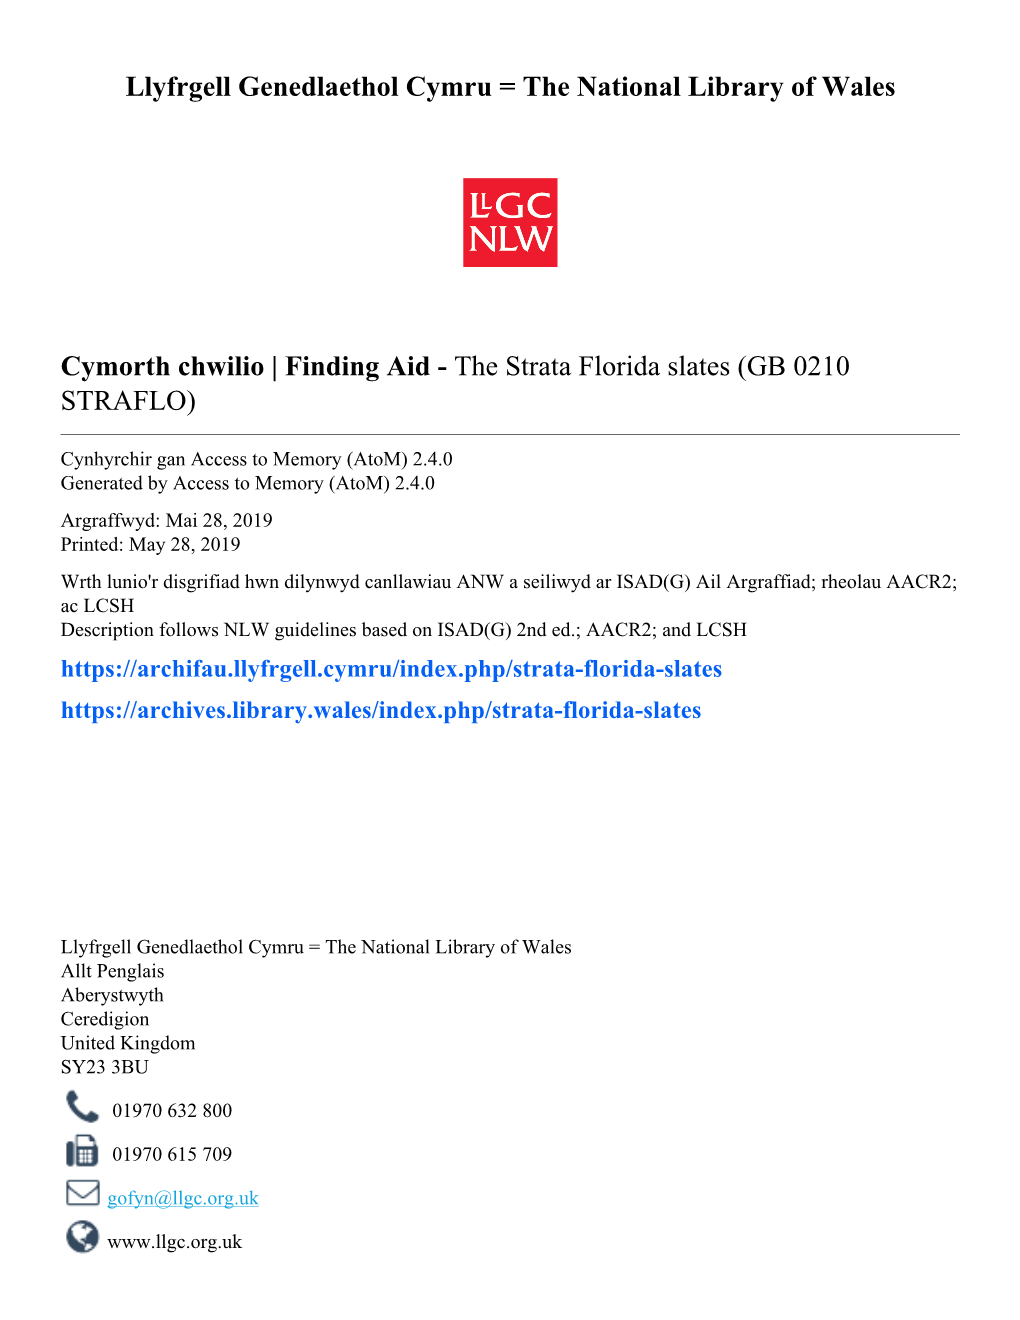 The Strata Florida Slates (GB 0210 STRAFLO)